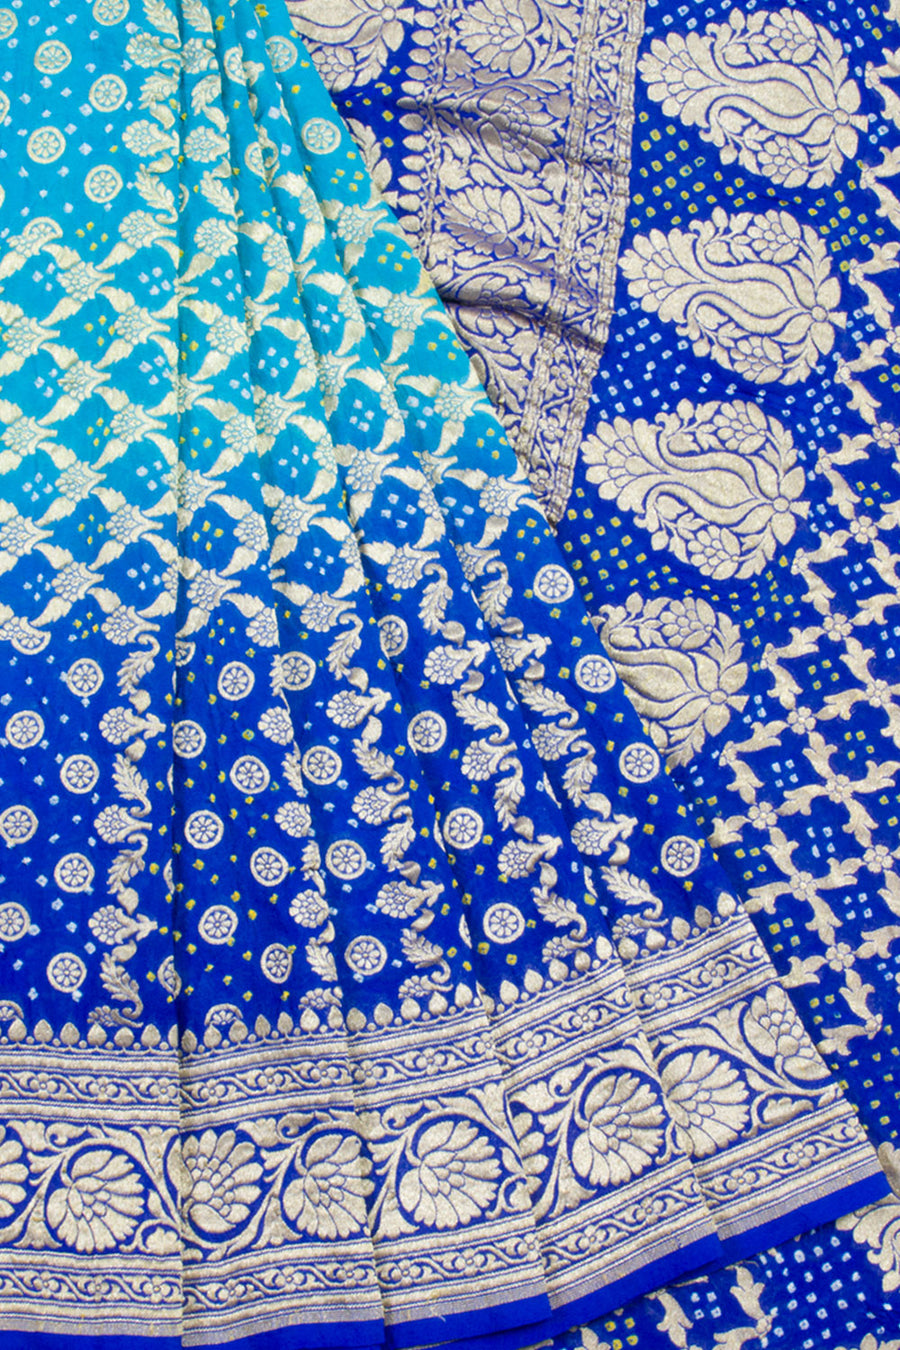 Handwoven Banarasi Bandhani Georgette Saree With Floral Design and Floral Border